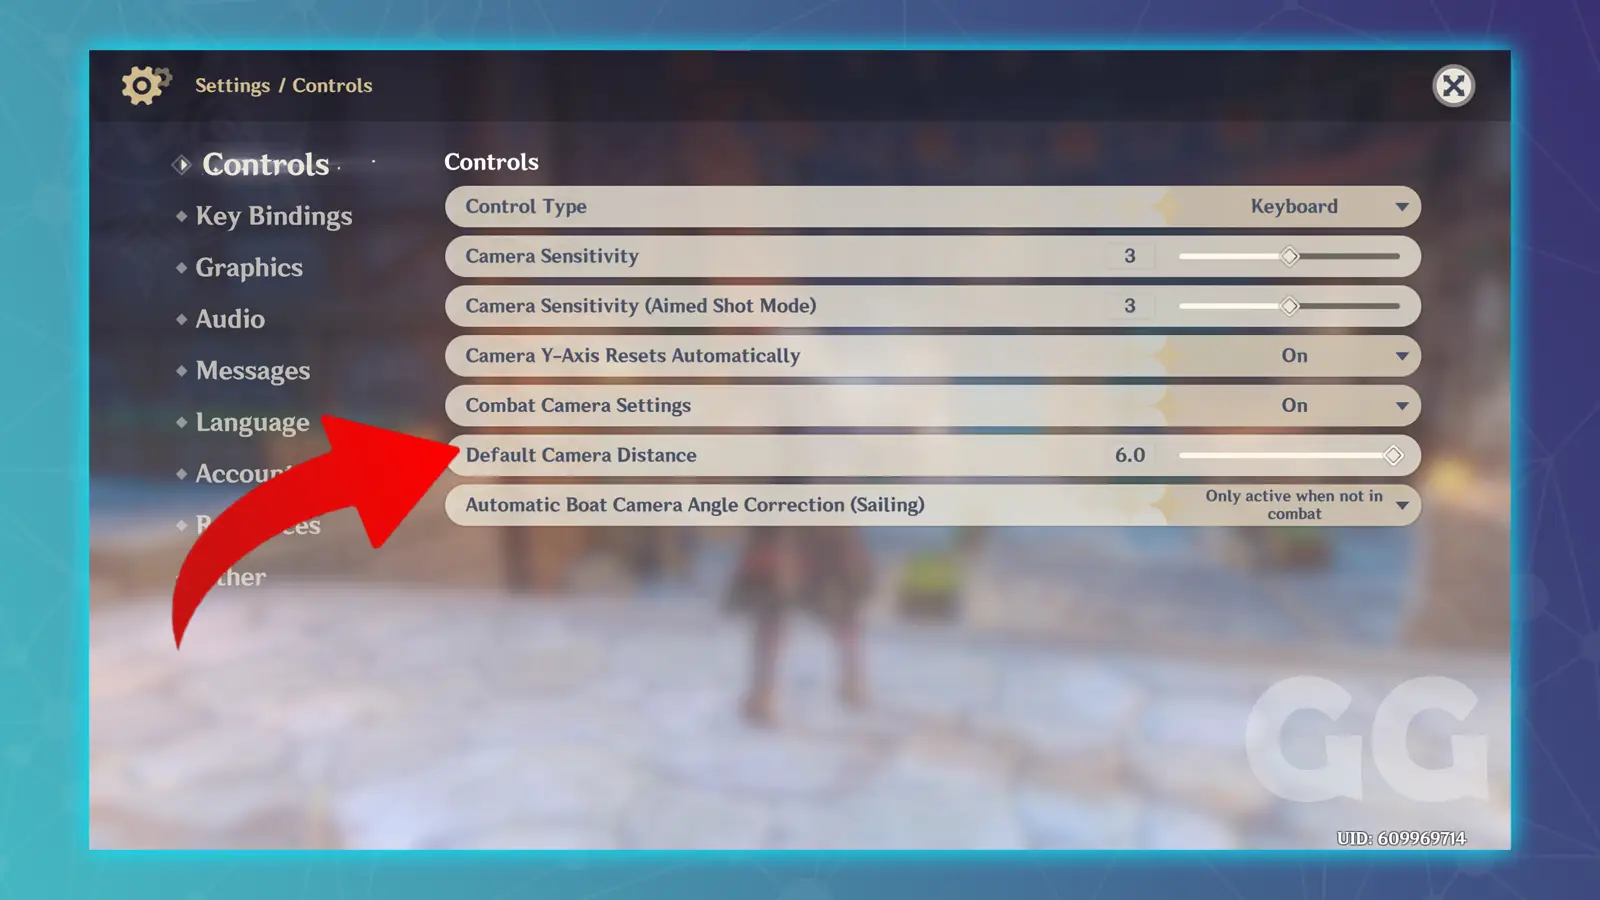 genshin impact settings menu showing the default camera distance feature